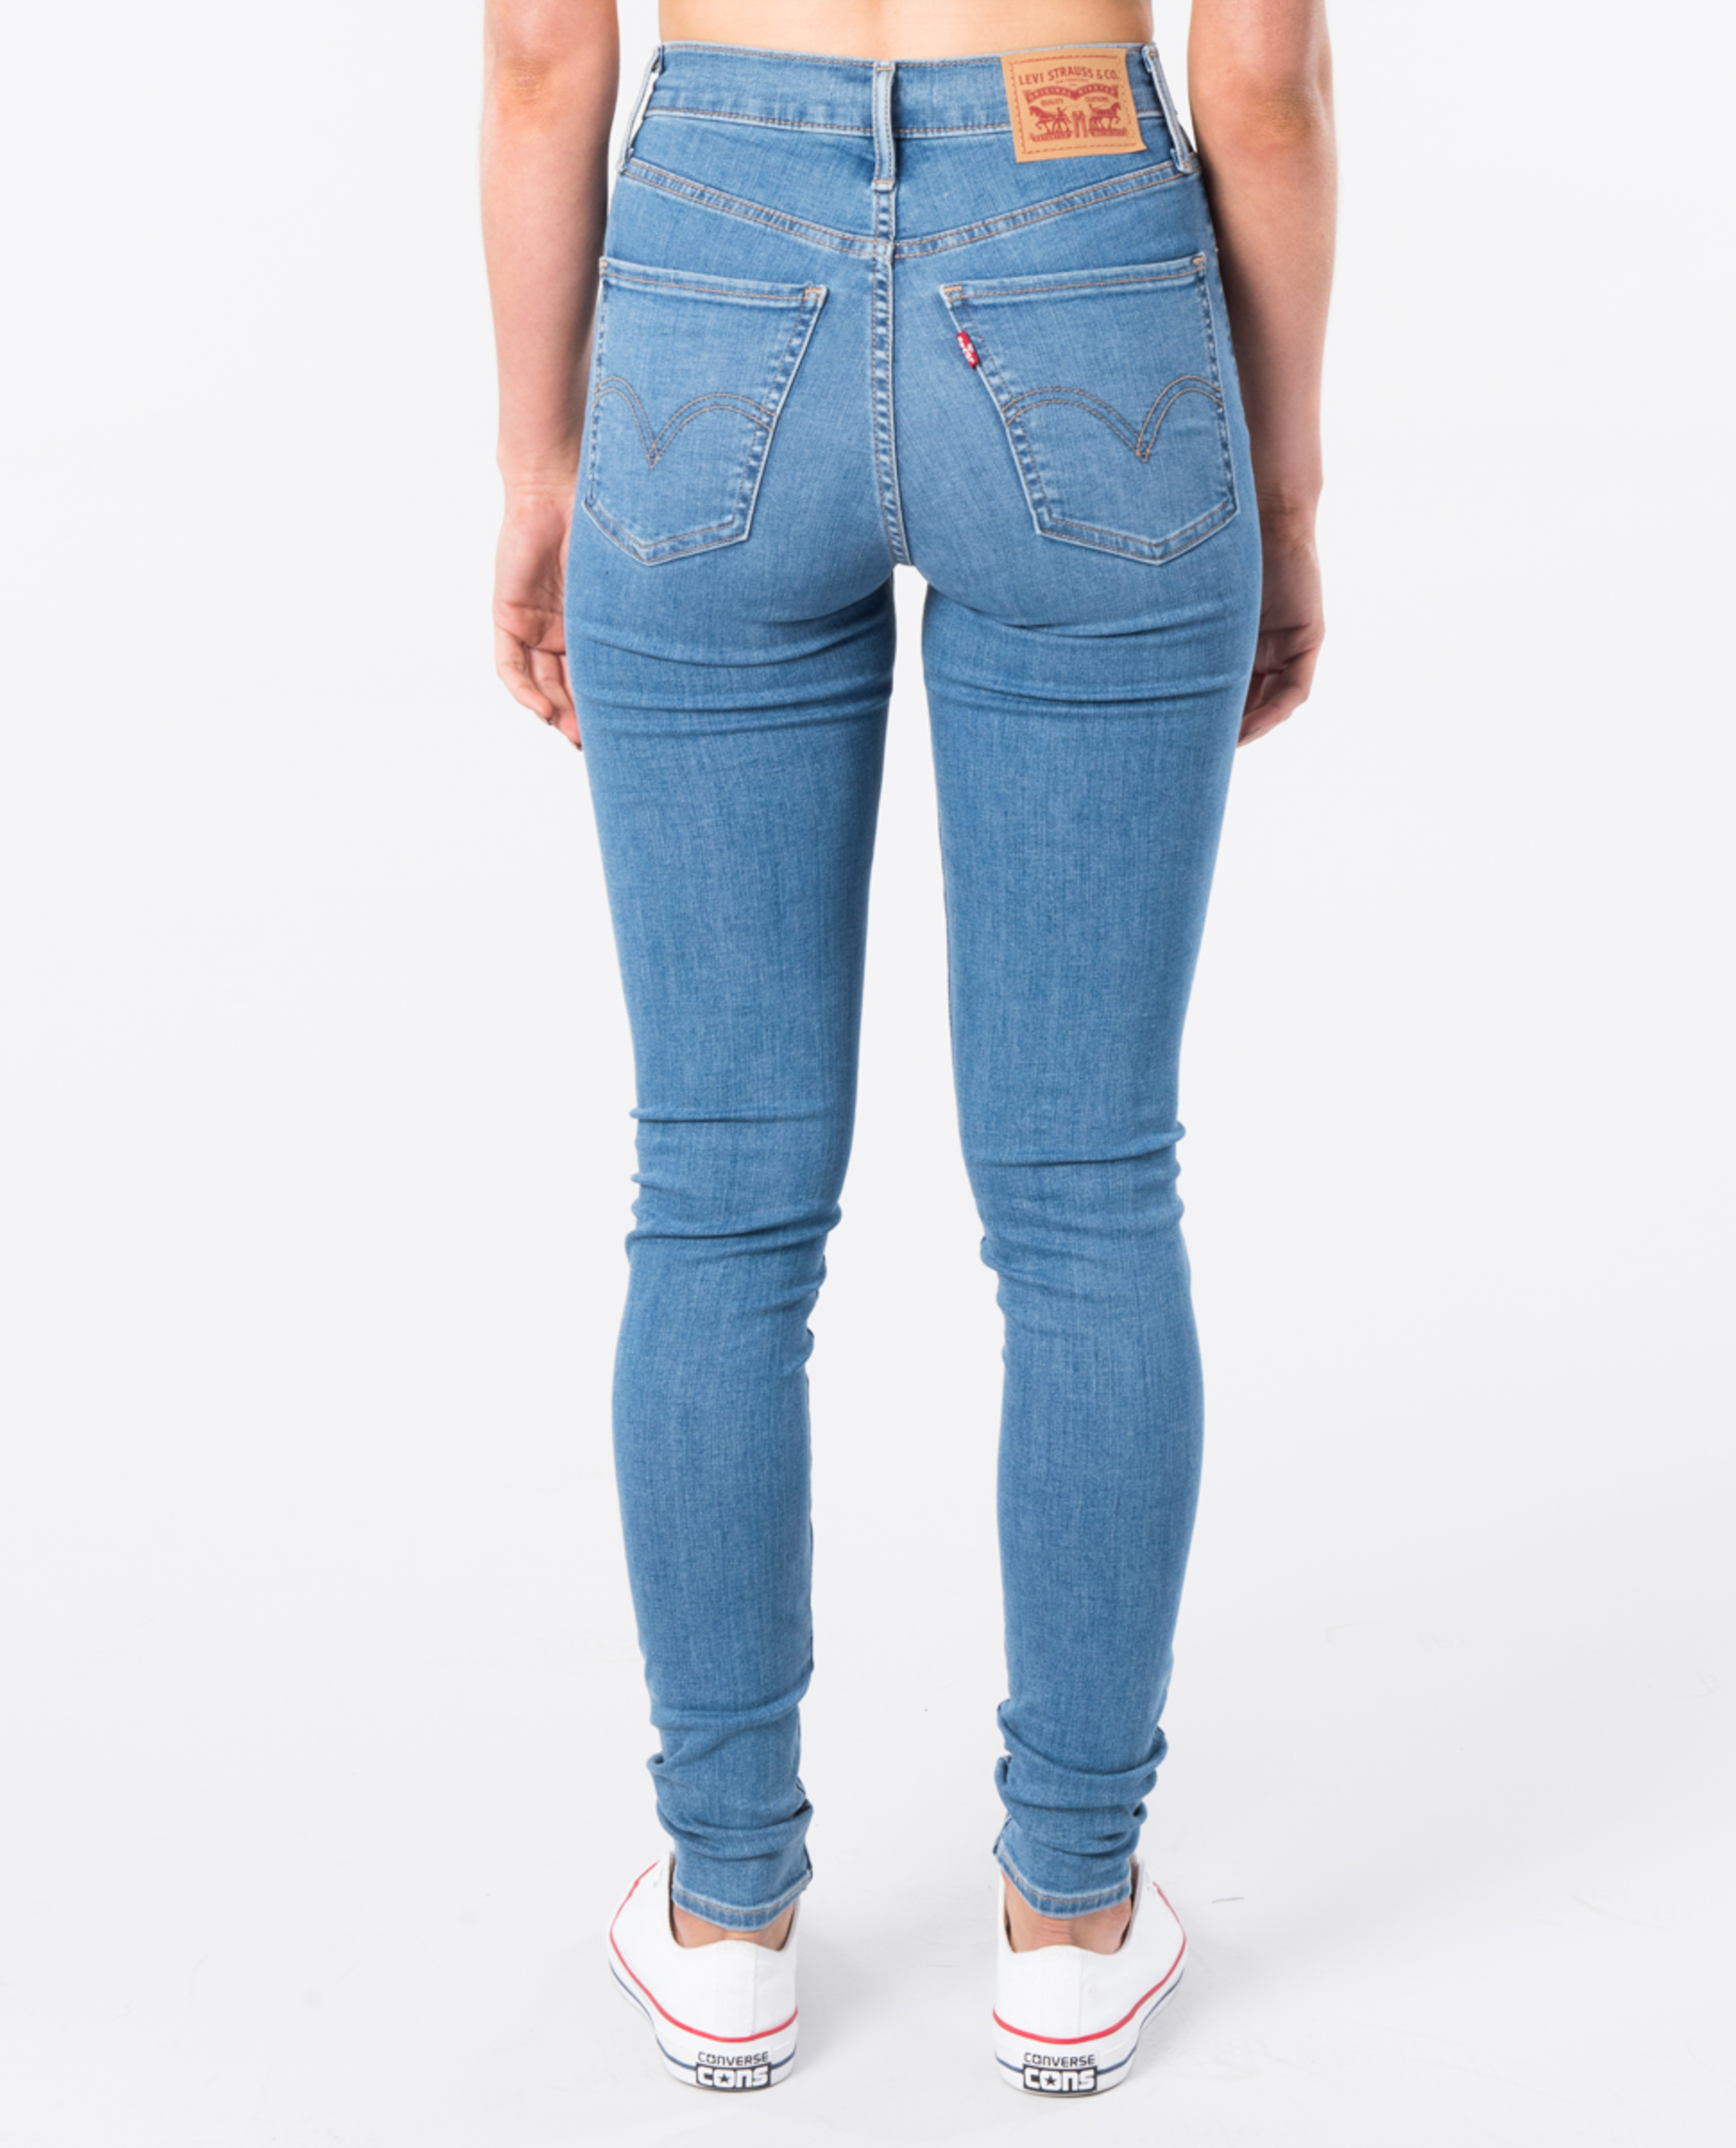 Super skinny jean - toronto blue Cotton On Jeans 